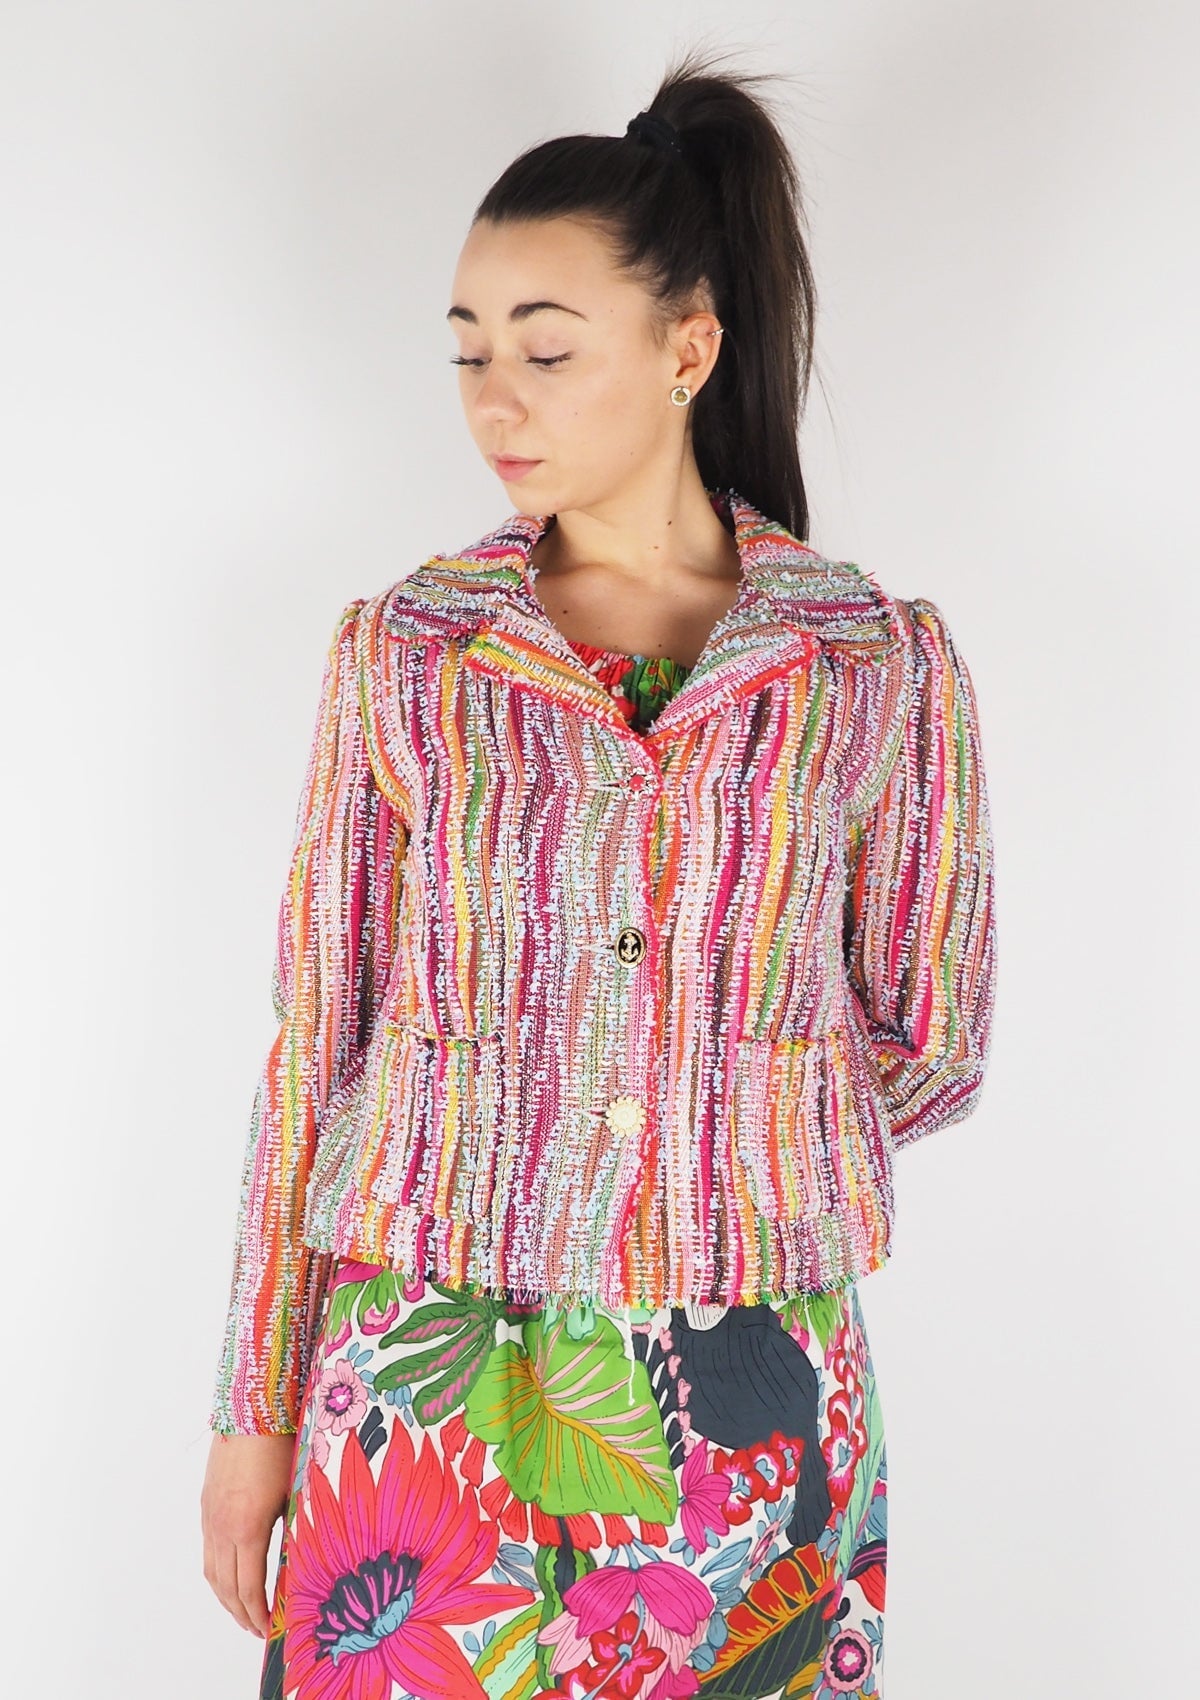 Damen Jacke aus Baumwolle, Viskose & andere Fasern in Multicolor Damen Jacke SHIRTAPORTER 